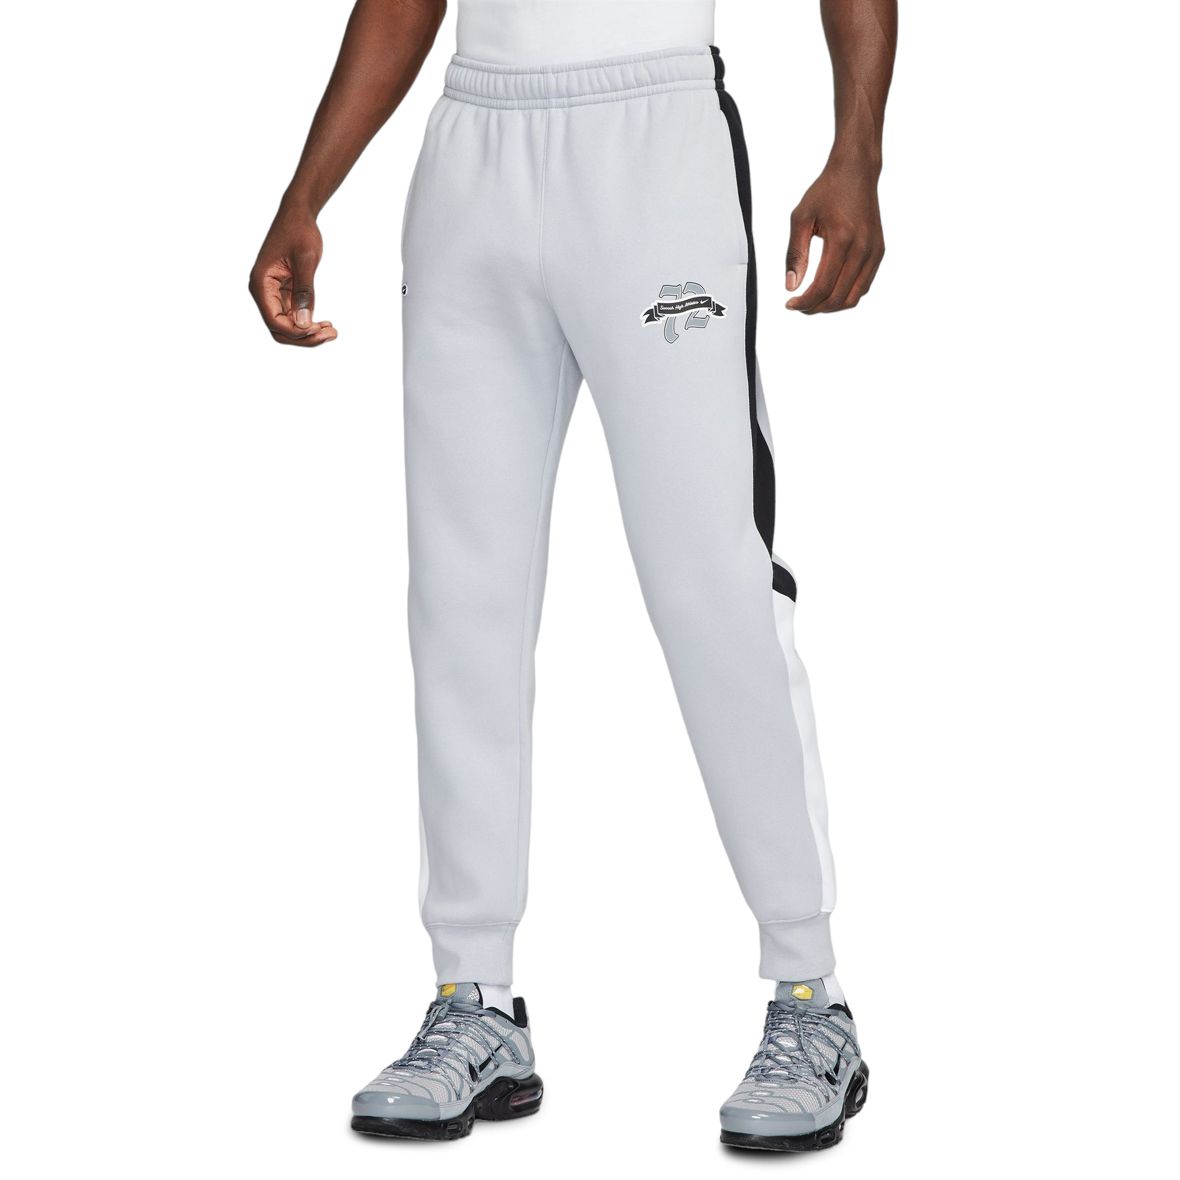 Nike Womens Club Fleece Jogger Sweatpants (Dark Grey/White, Medium